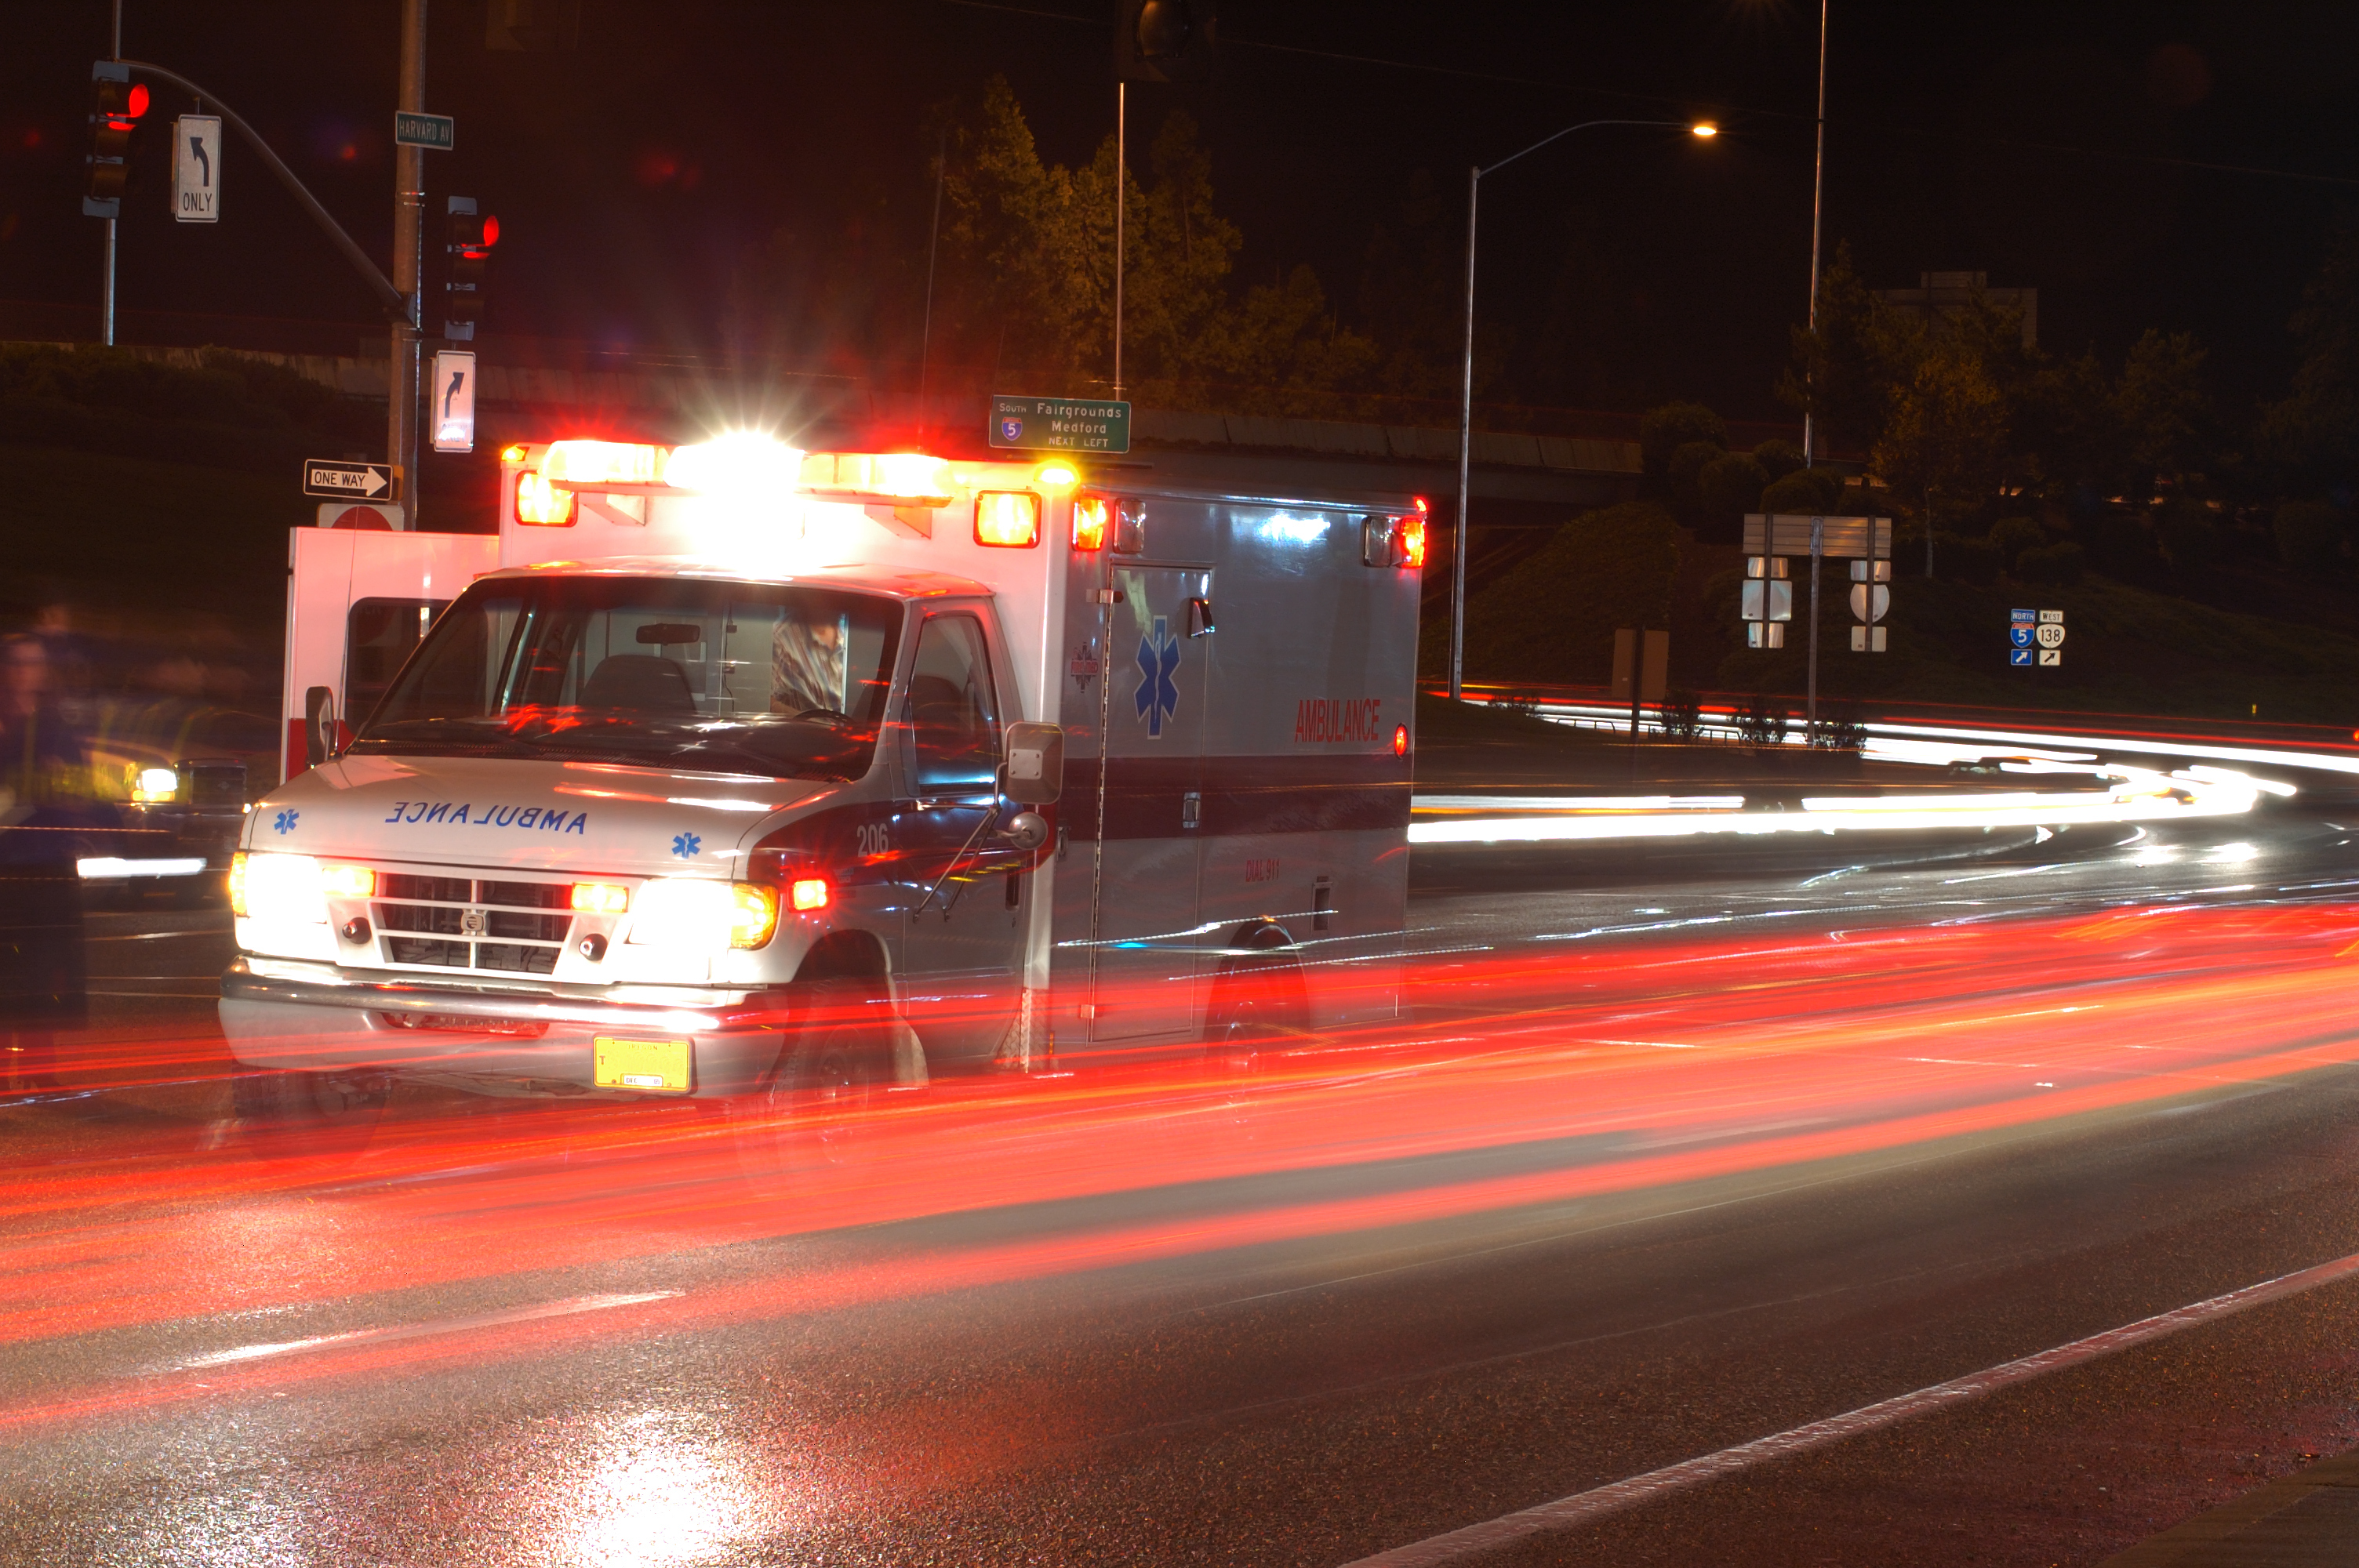 speeding ambulance at night